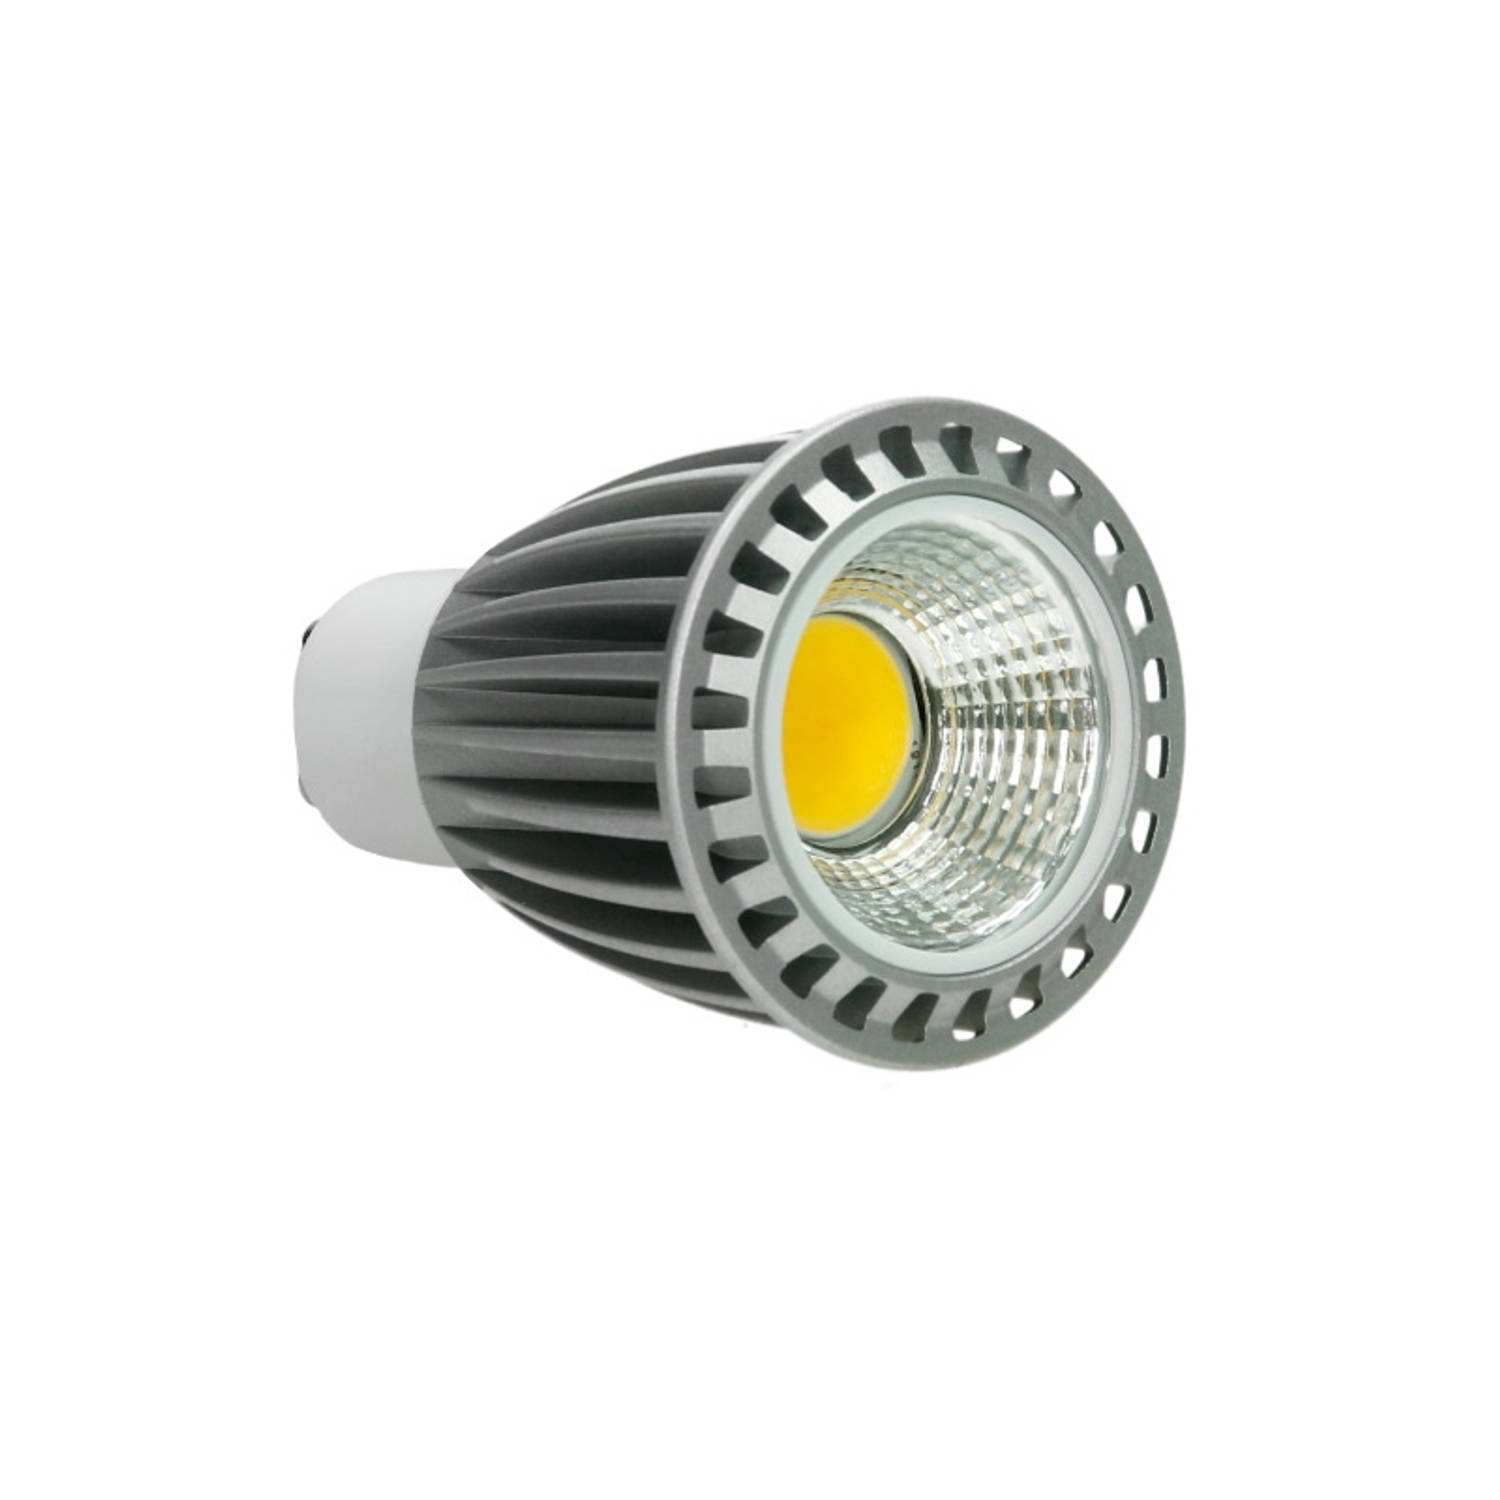 ECD Germany 6-pack 9W GU10 LED spot vervangt - 60W halogeen - 220-240V 60° stralingshoek - 552 lumen - 6000K koel wit